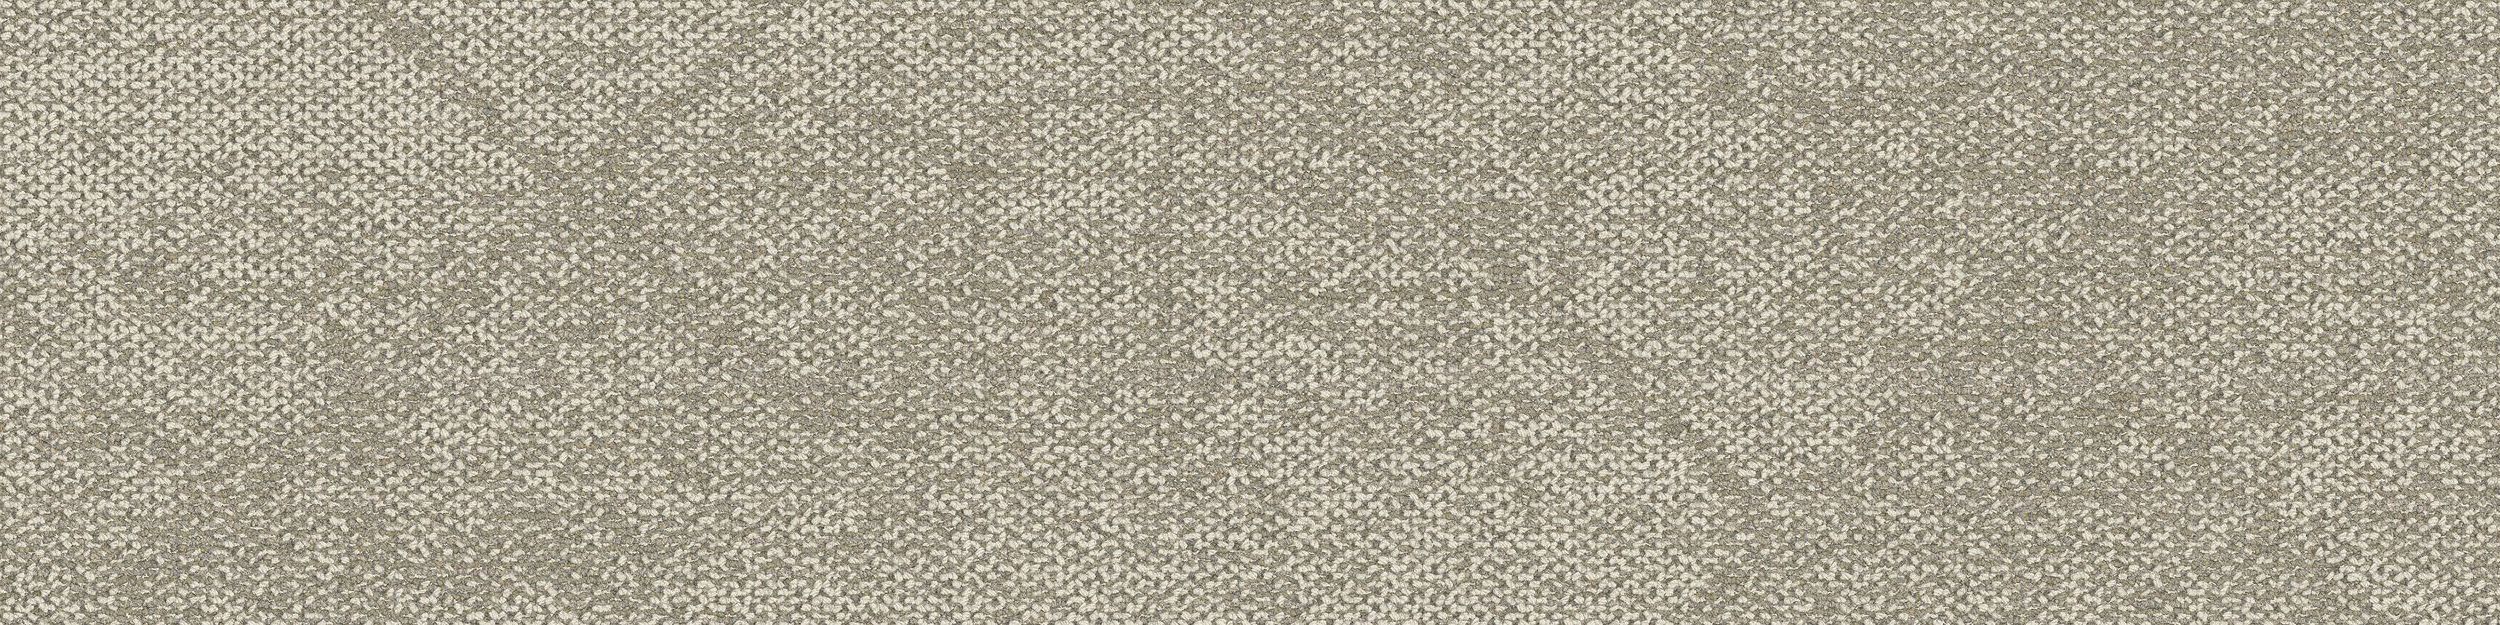 Angle Up Carpet Tile In Sulfur image number 2